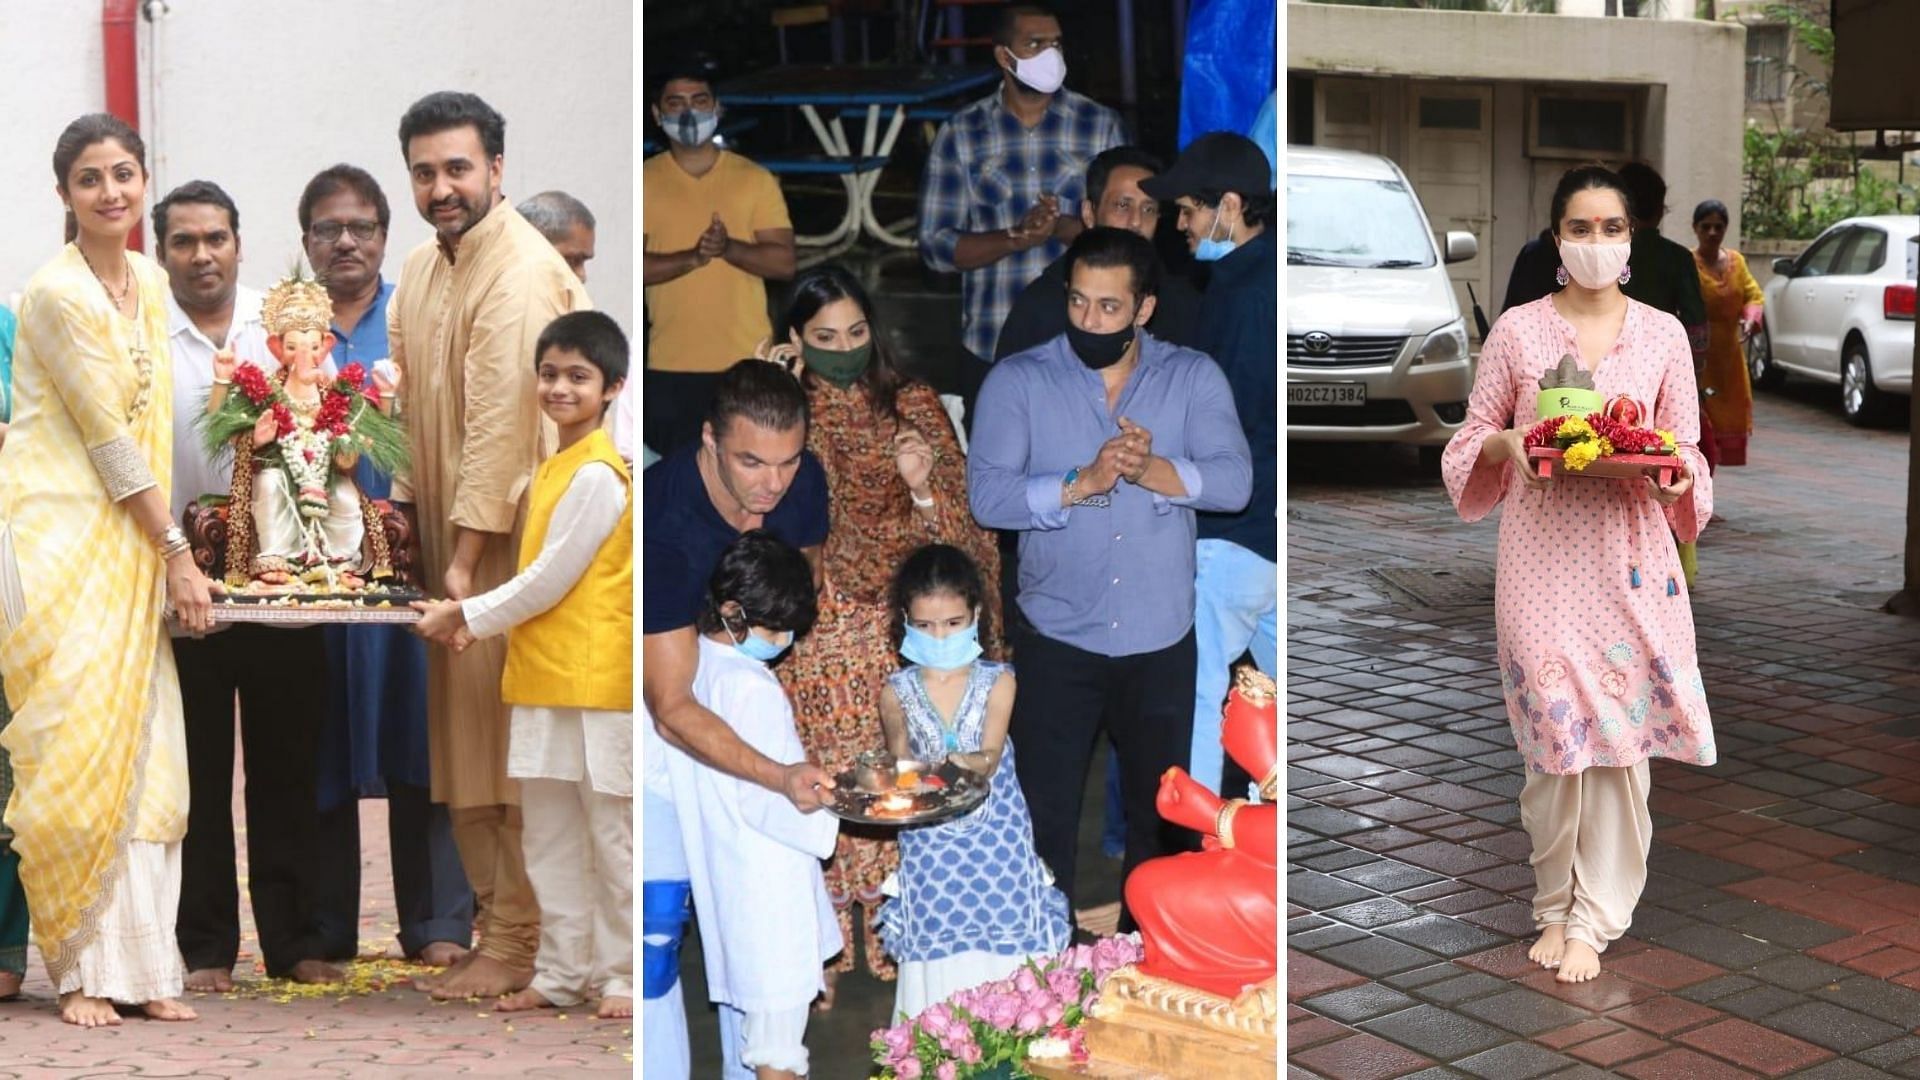 Celebrities during the Ganesh Chaturthi festivites.